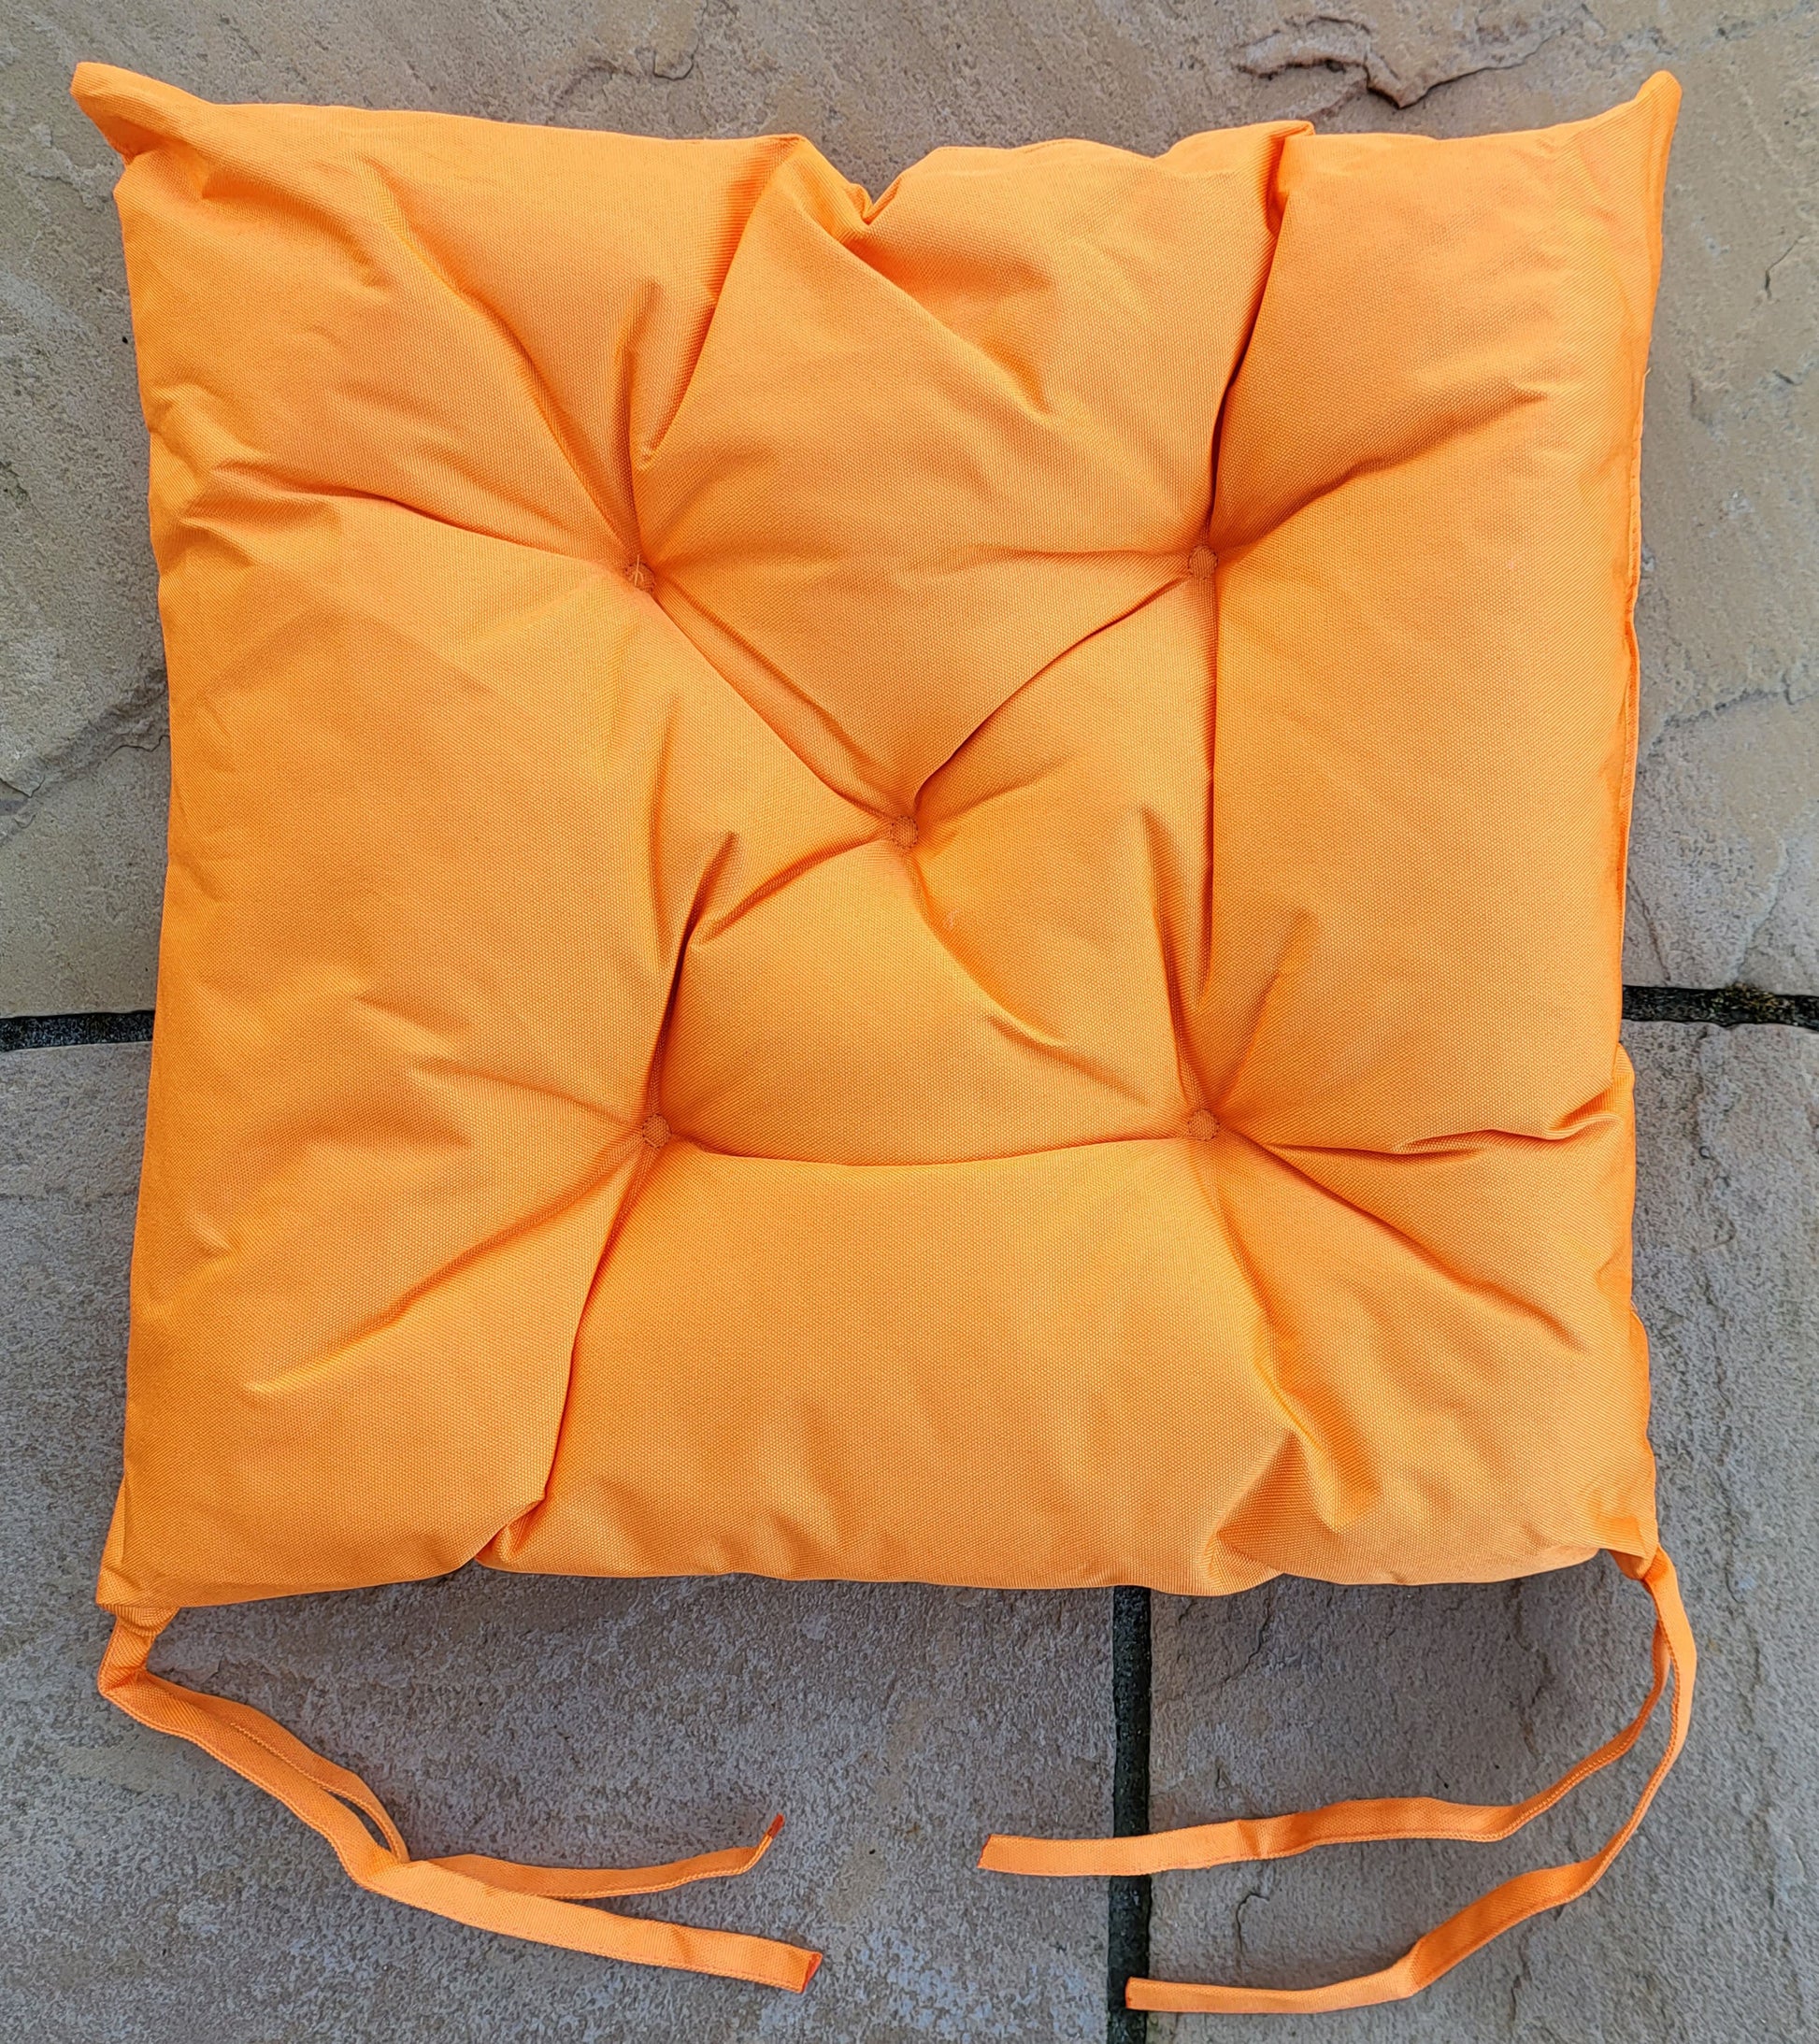 Outdoor Waterproof Garden Chunky Chair Seat Pads Orange